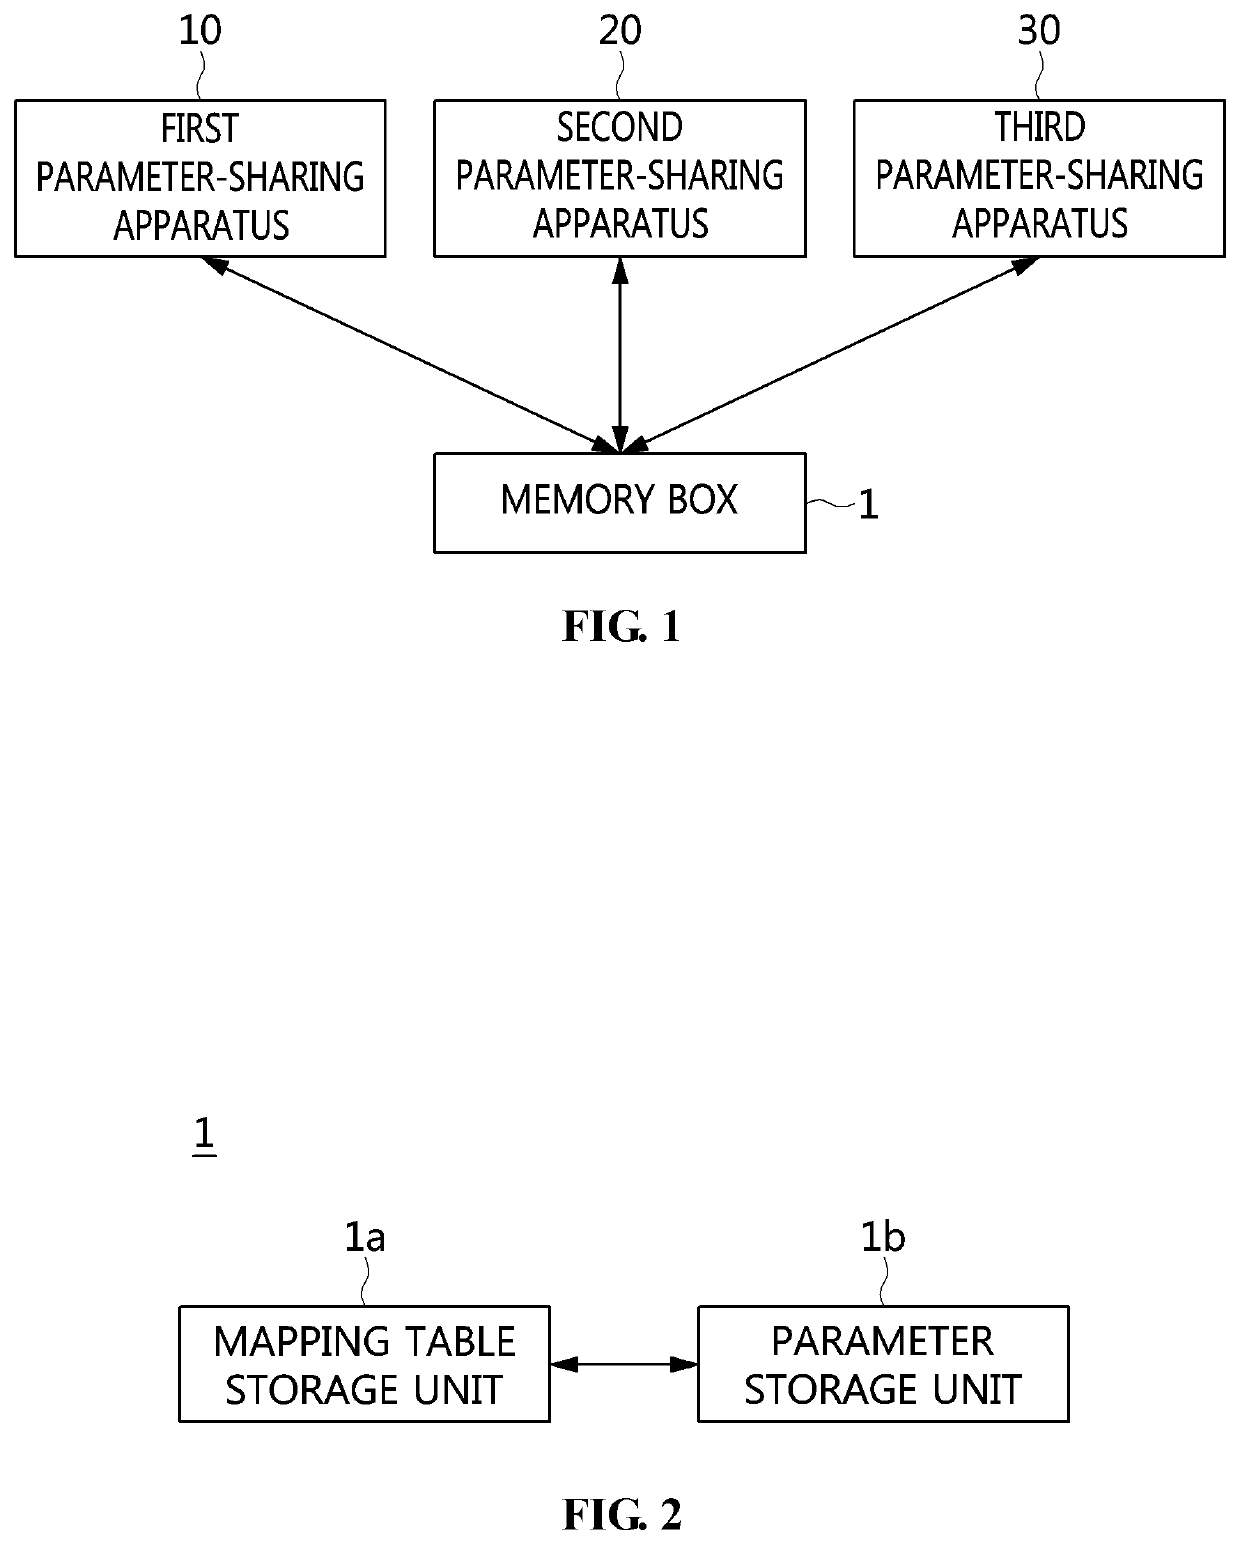 Parameter-sharing apparatus and method